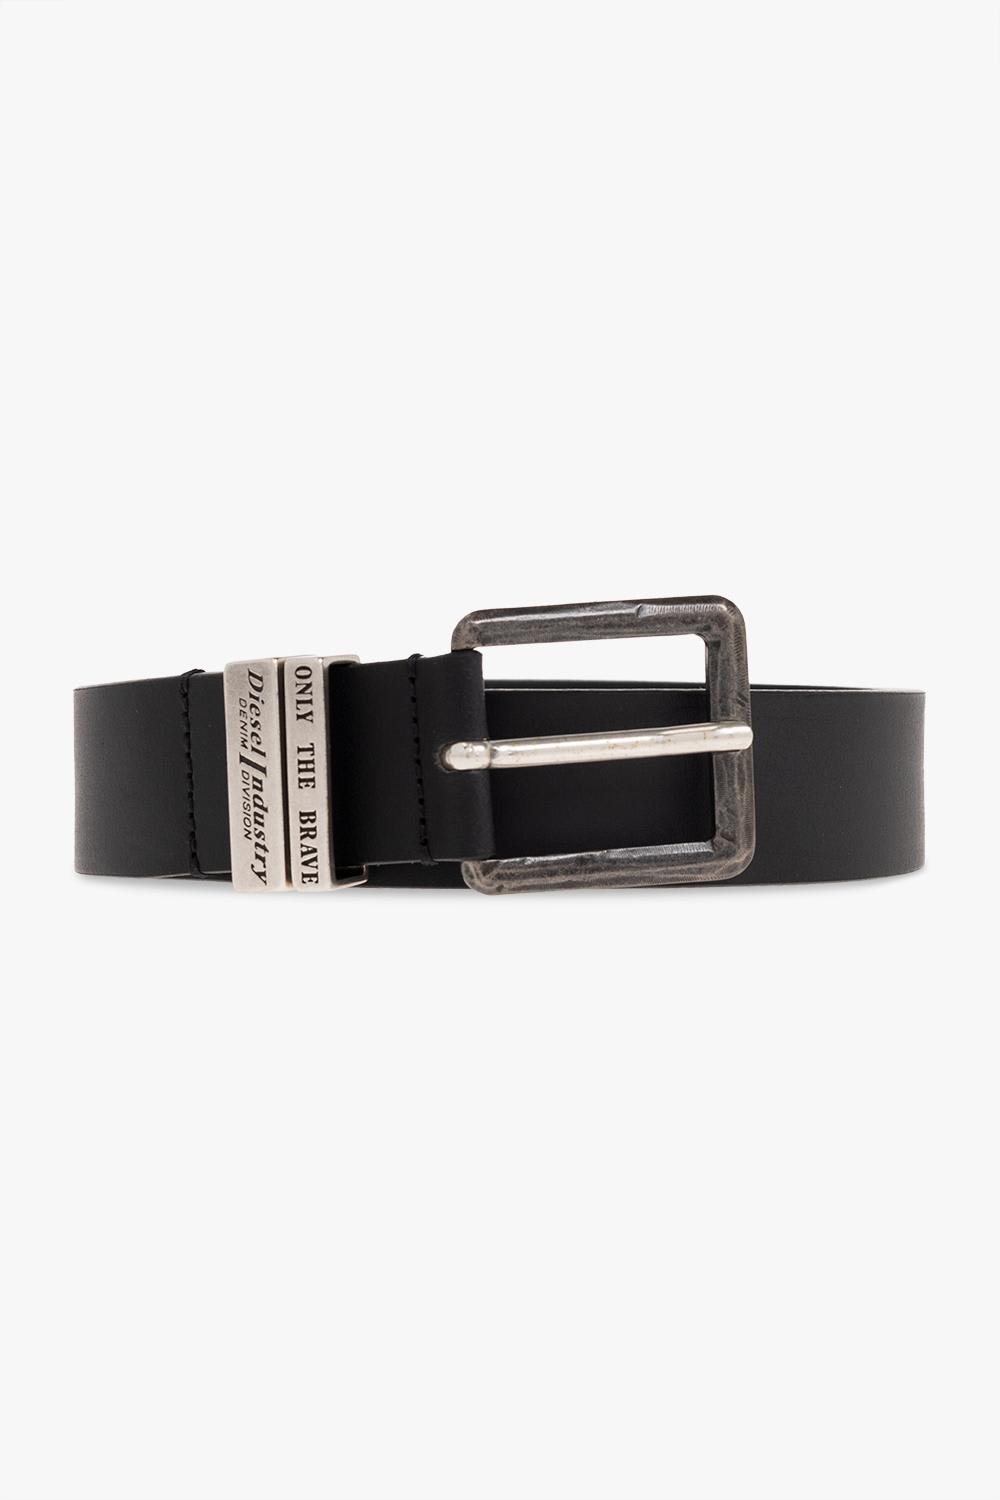 guarantee-a Leather Belt